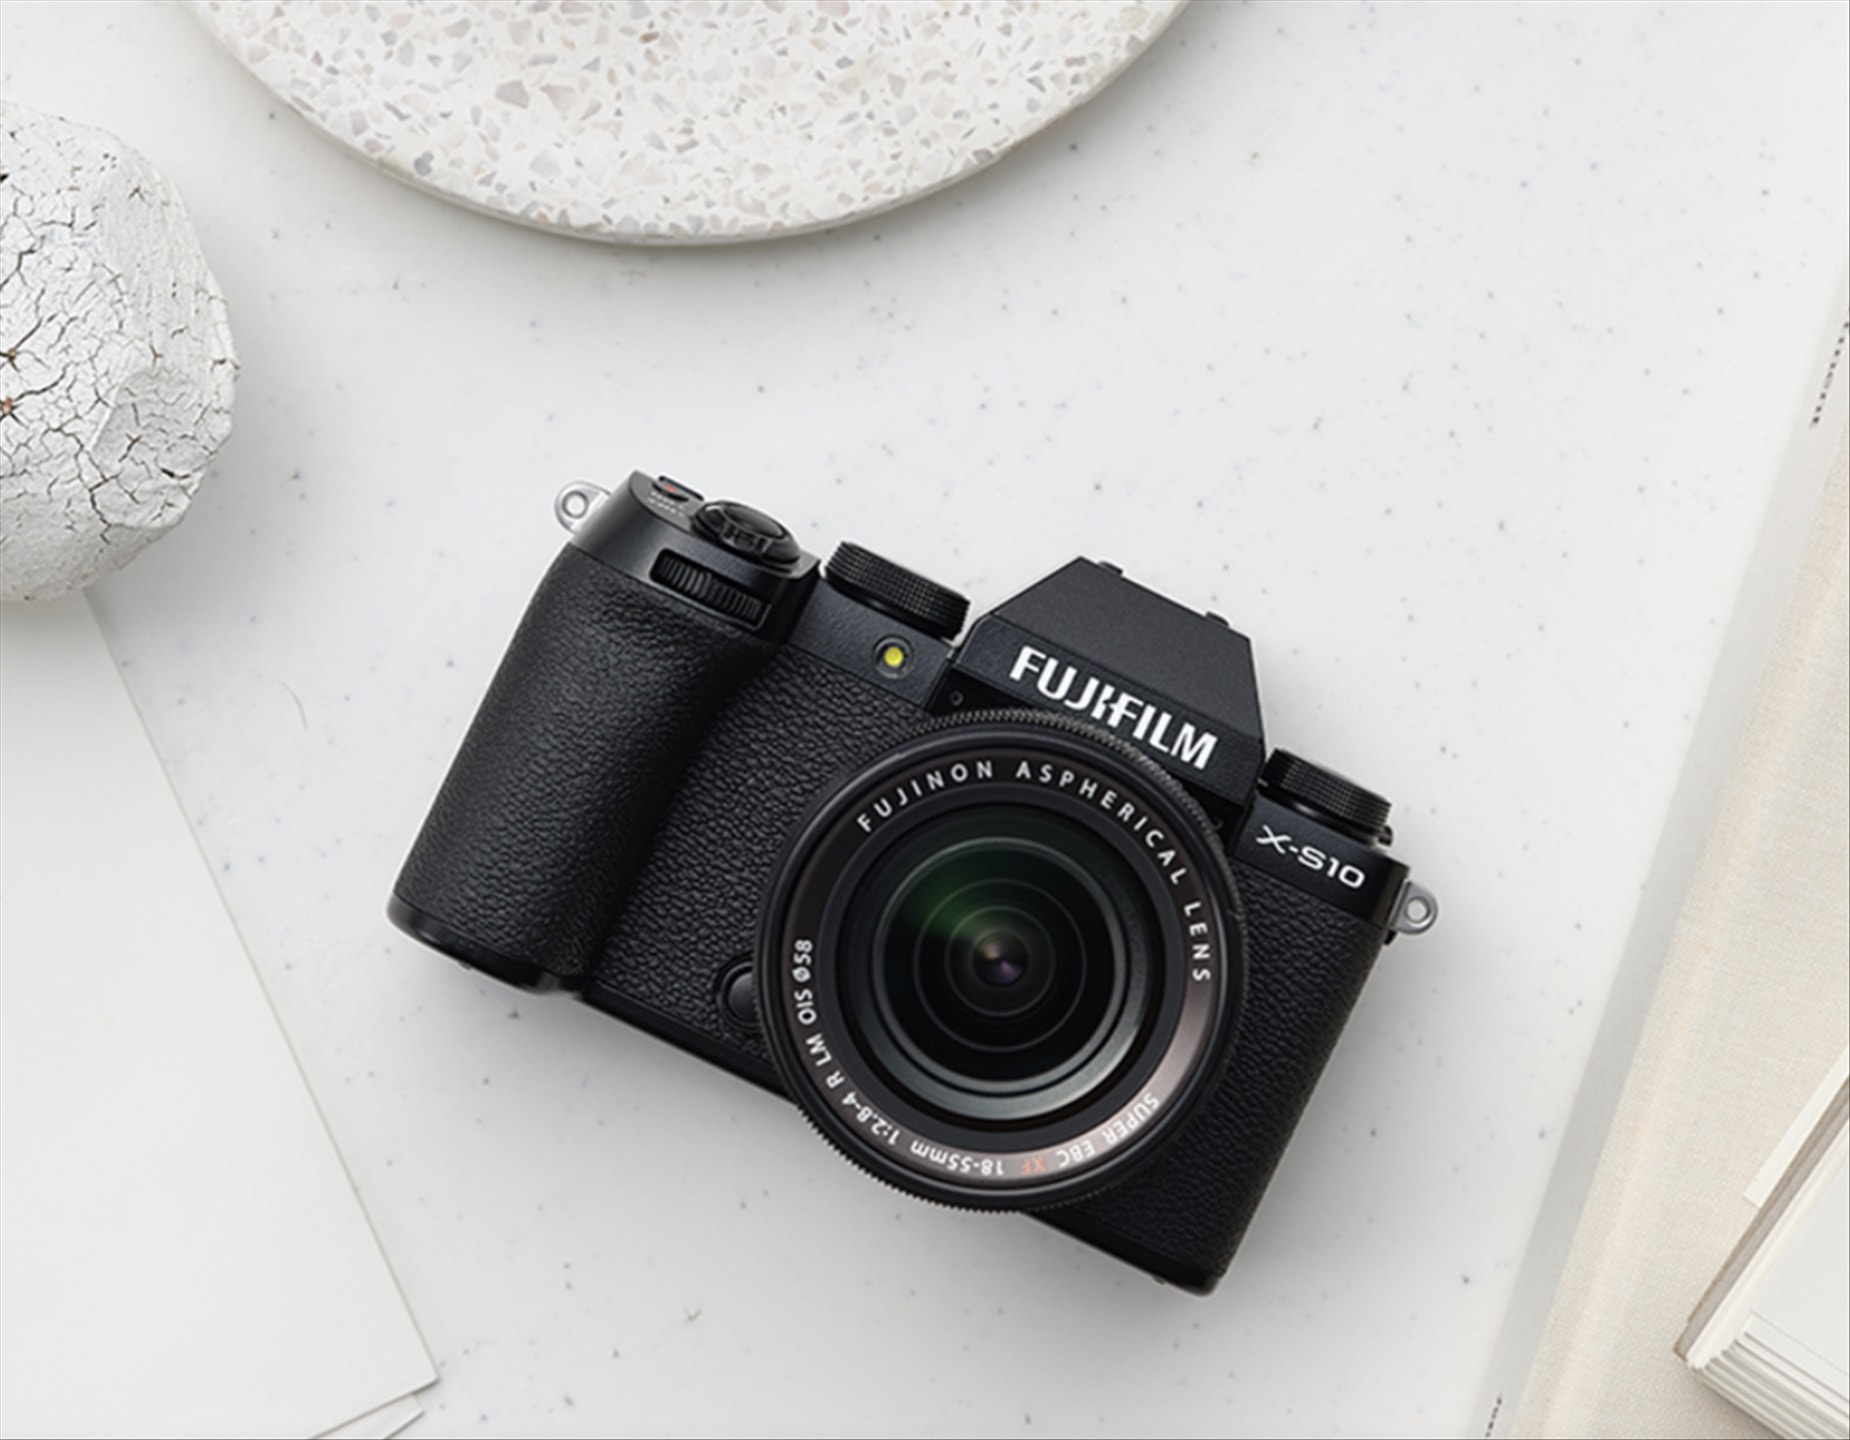 FUJIFILM X-S10, a compact and portable mirrorless camera